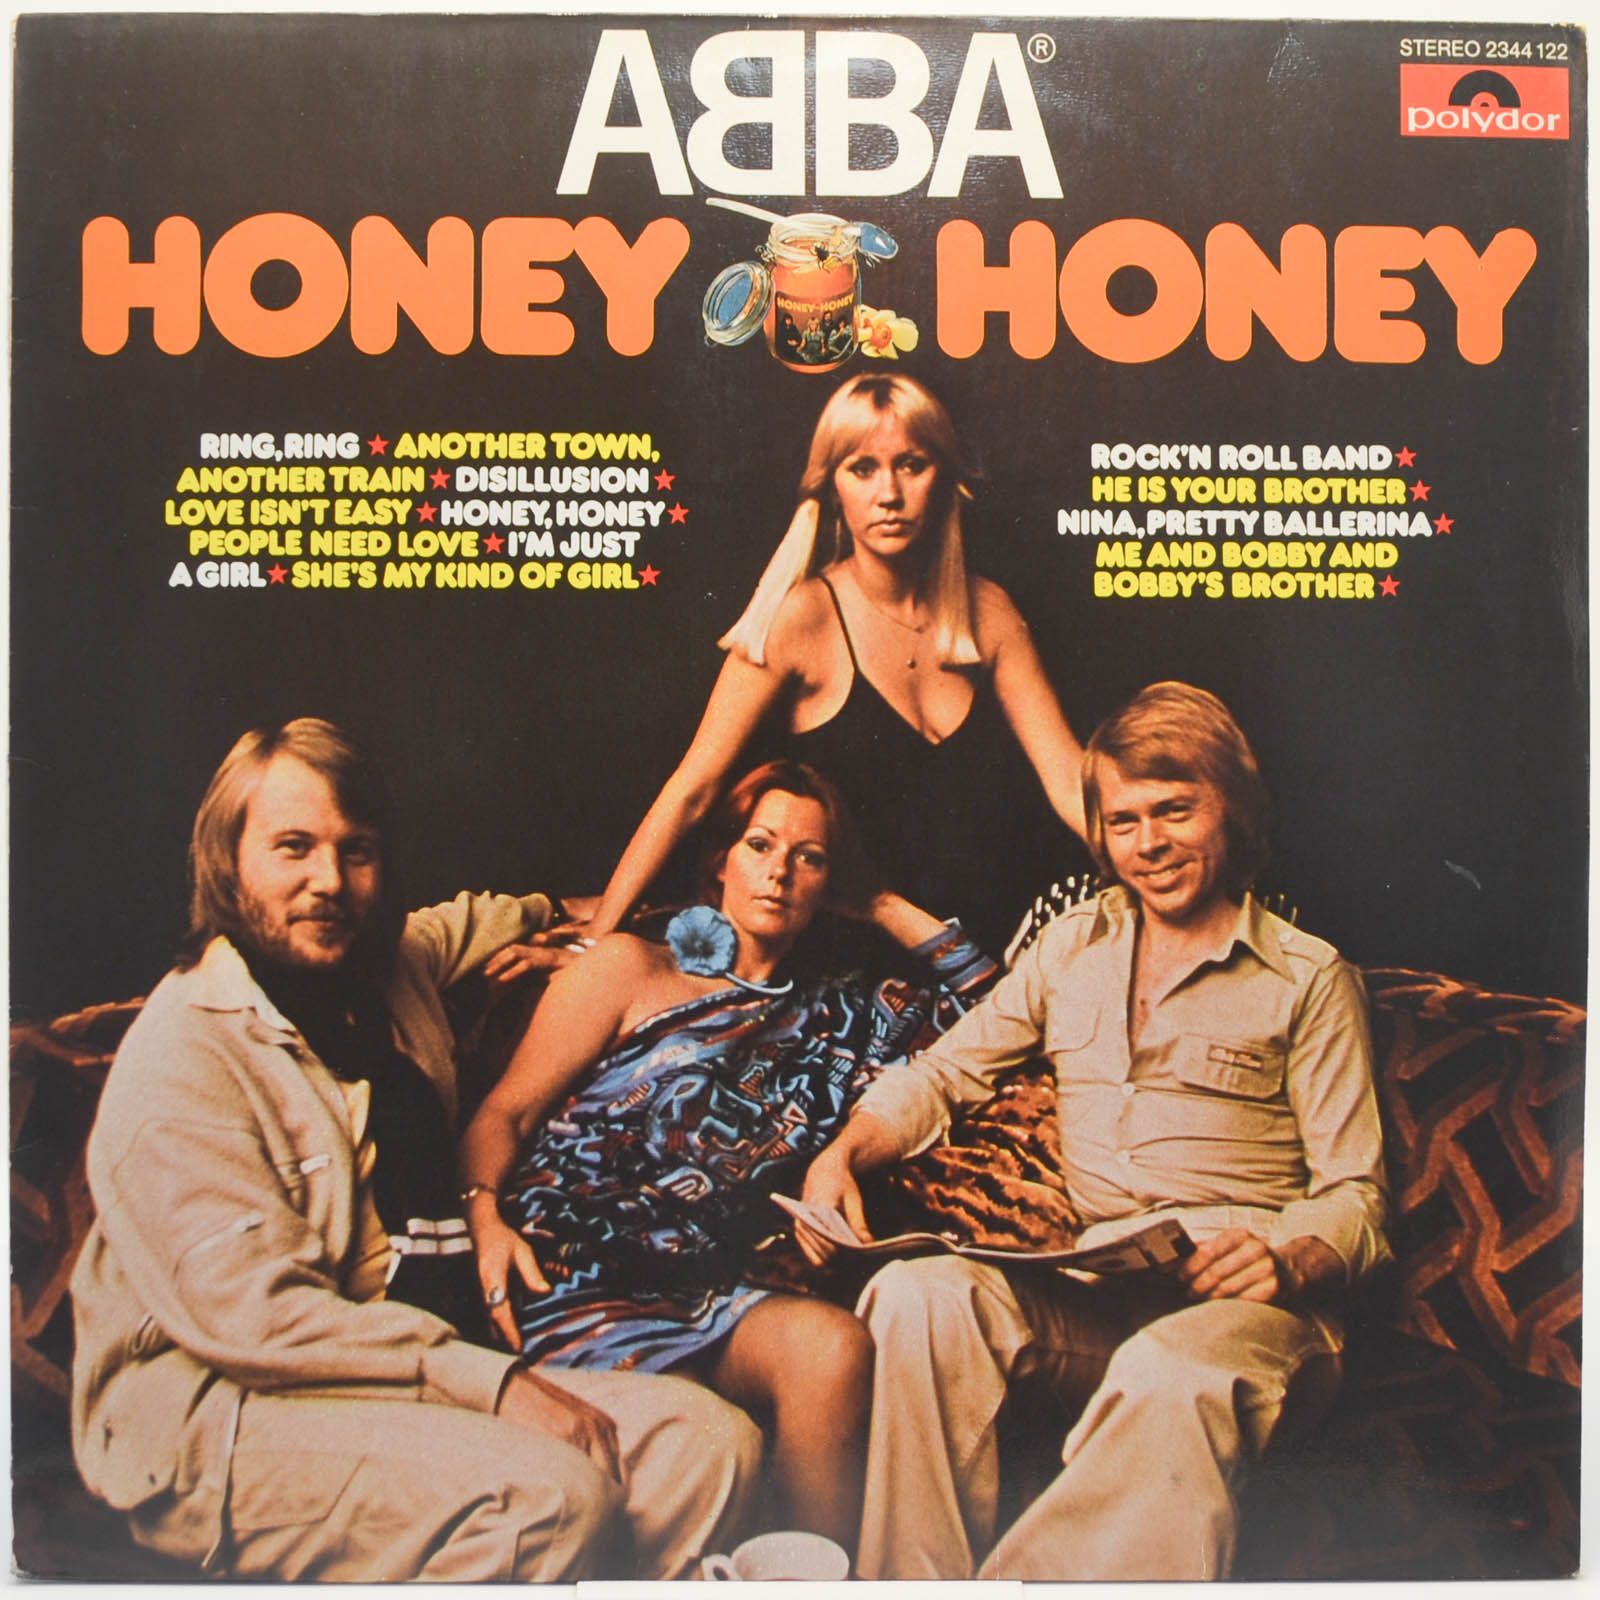 ABBA — Honey, Honey, 1975